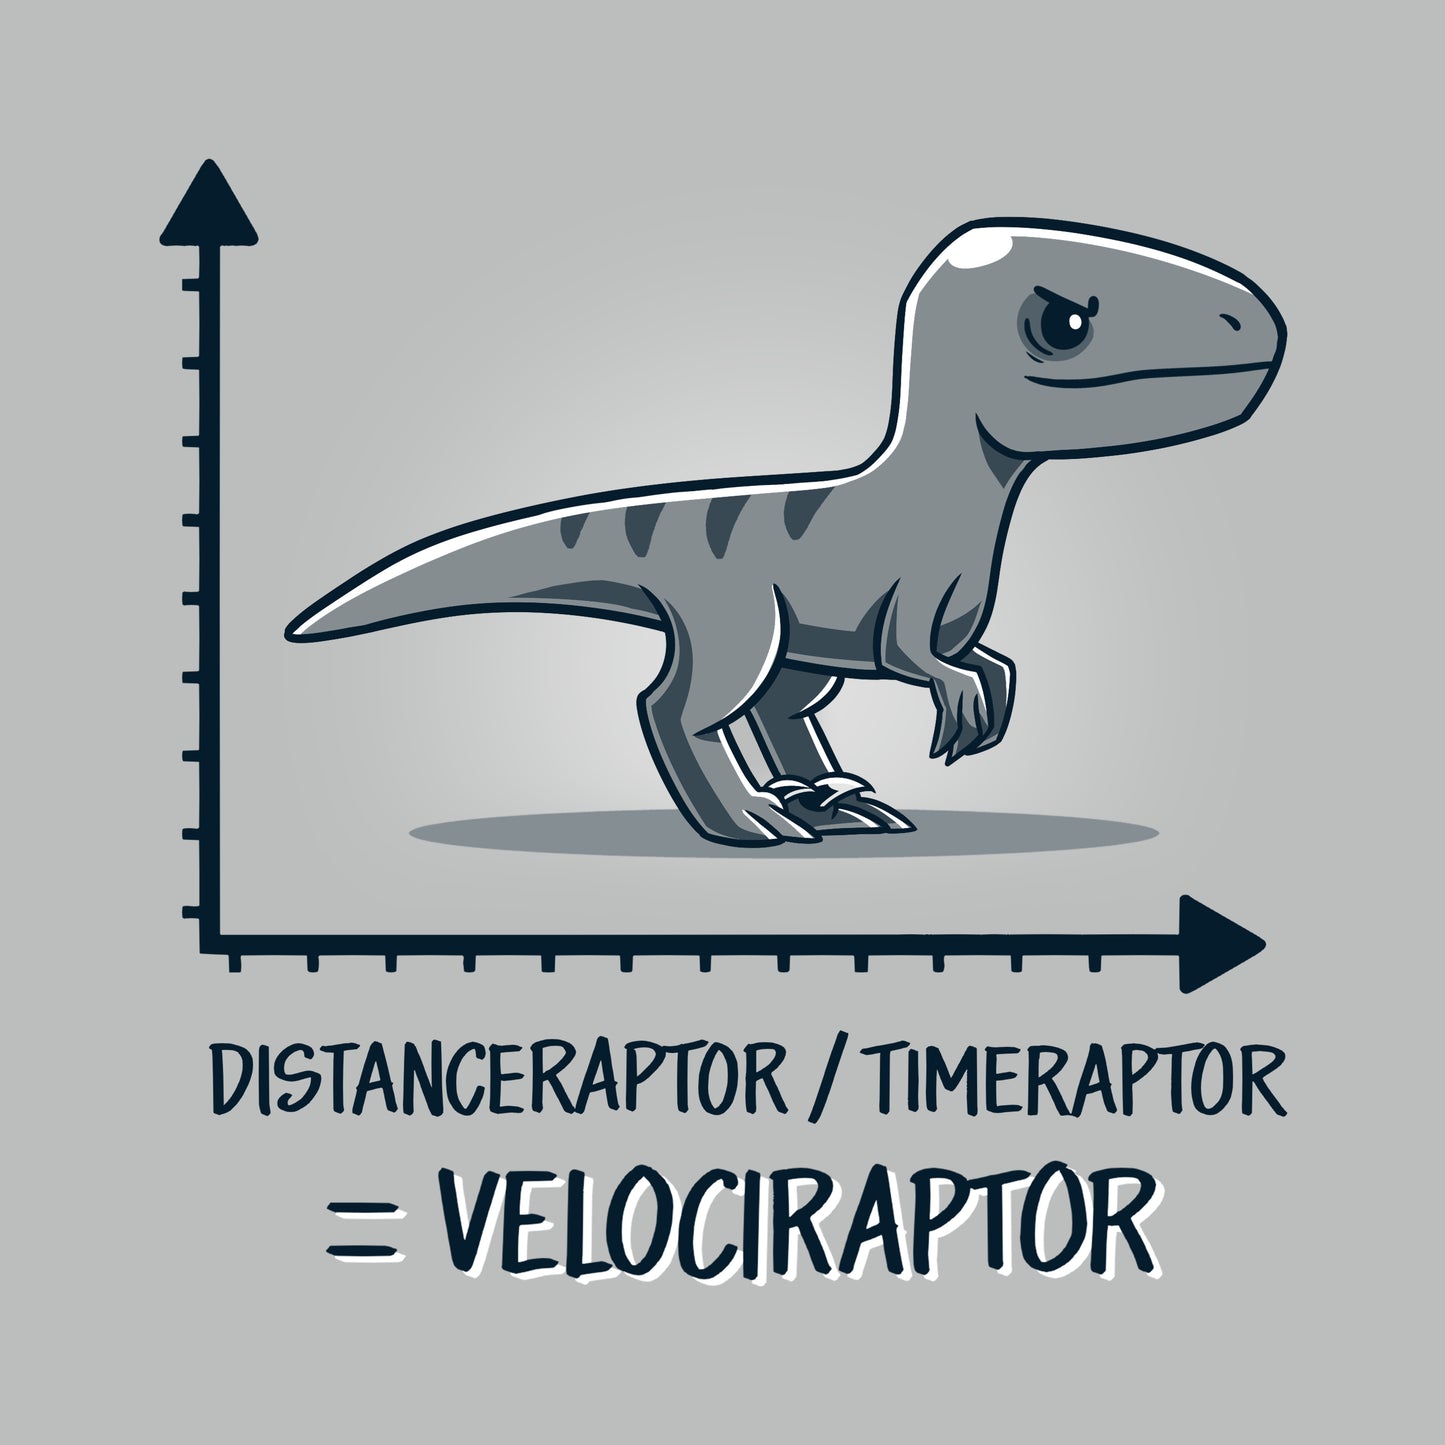 Distanciator / timerator / velocator enhances math skills and calculates using the TeeTurtle Velociraptor formula.